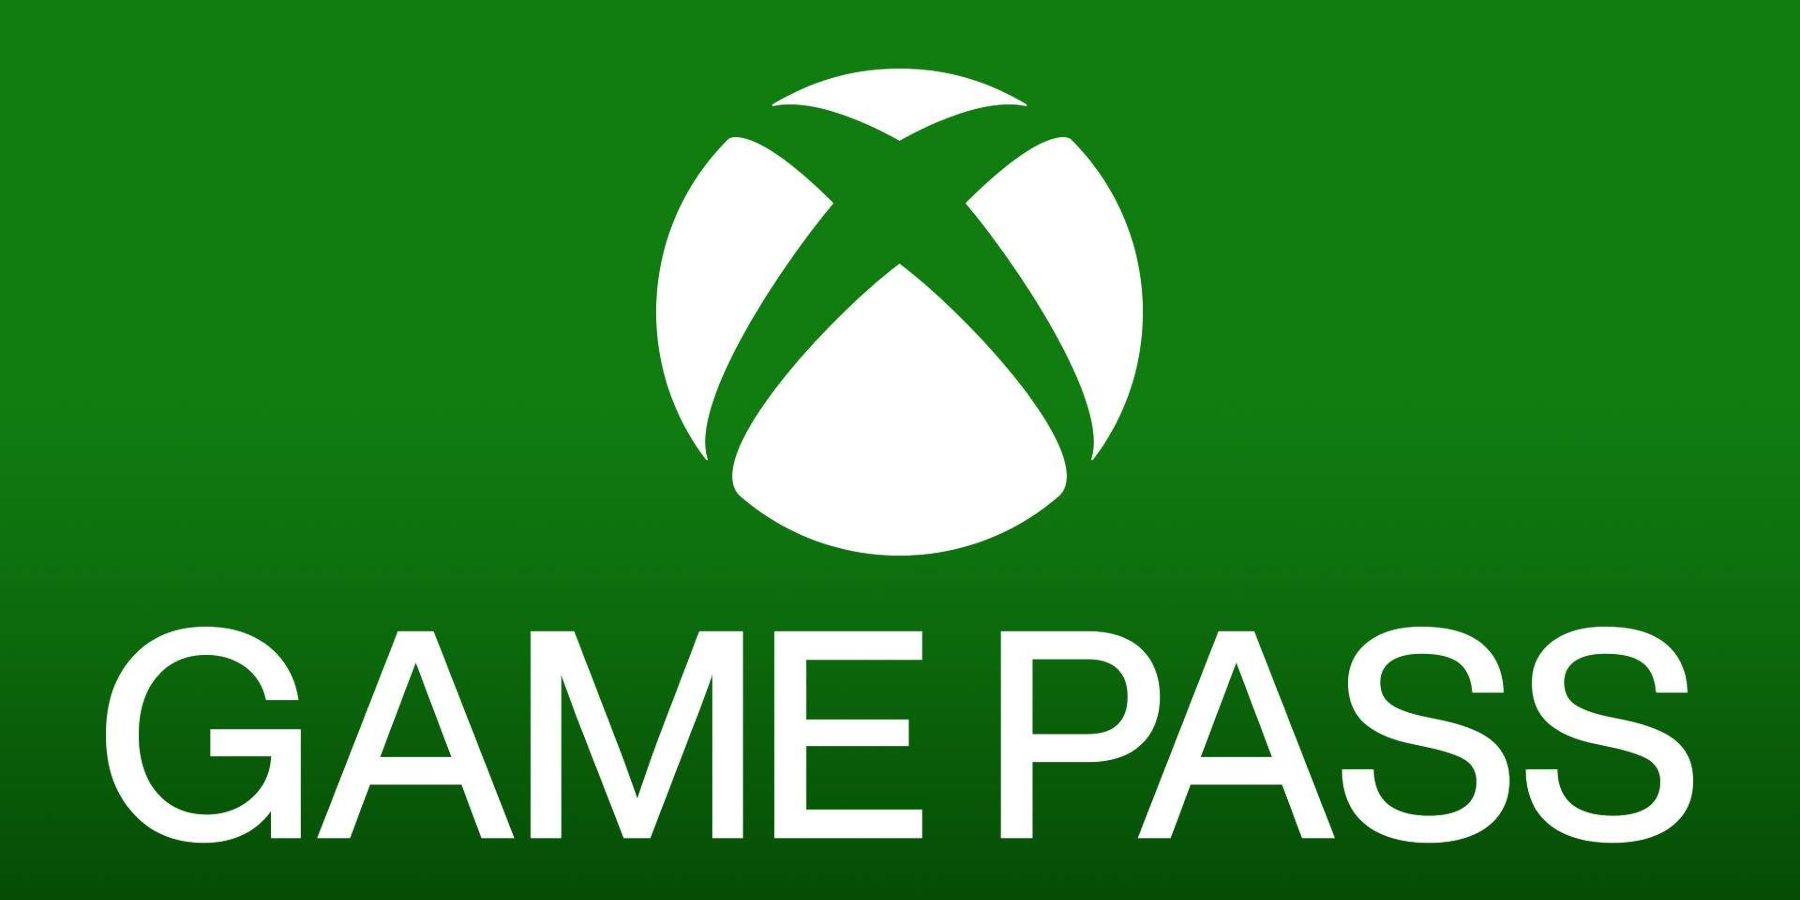 UPDATE: Abonați Xbox Game Pass la 30 de milioane, spune CEO-ul Take-Two